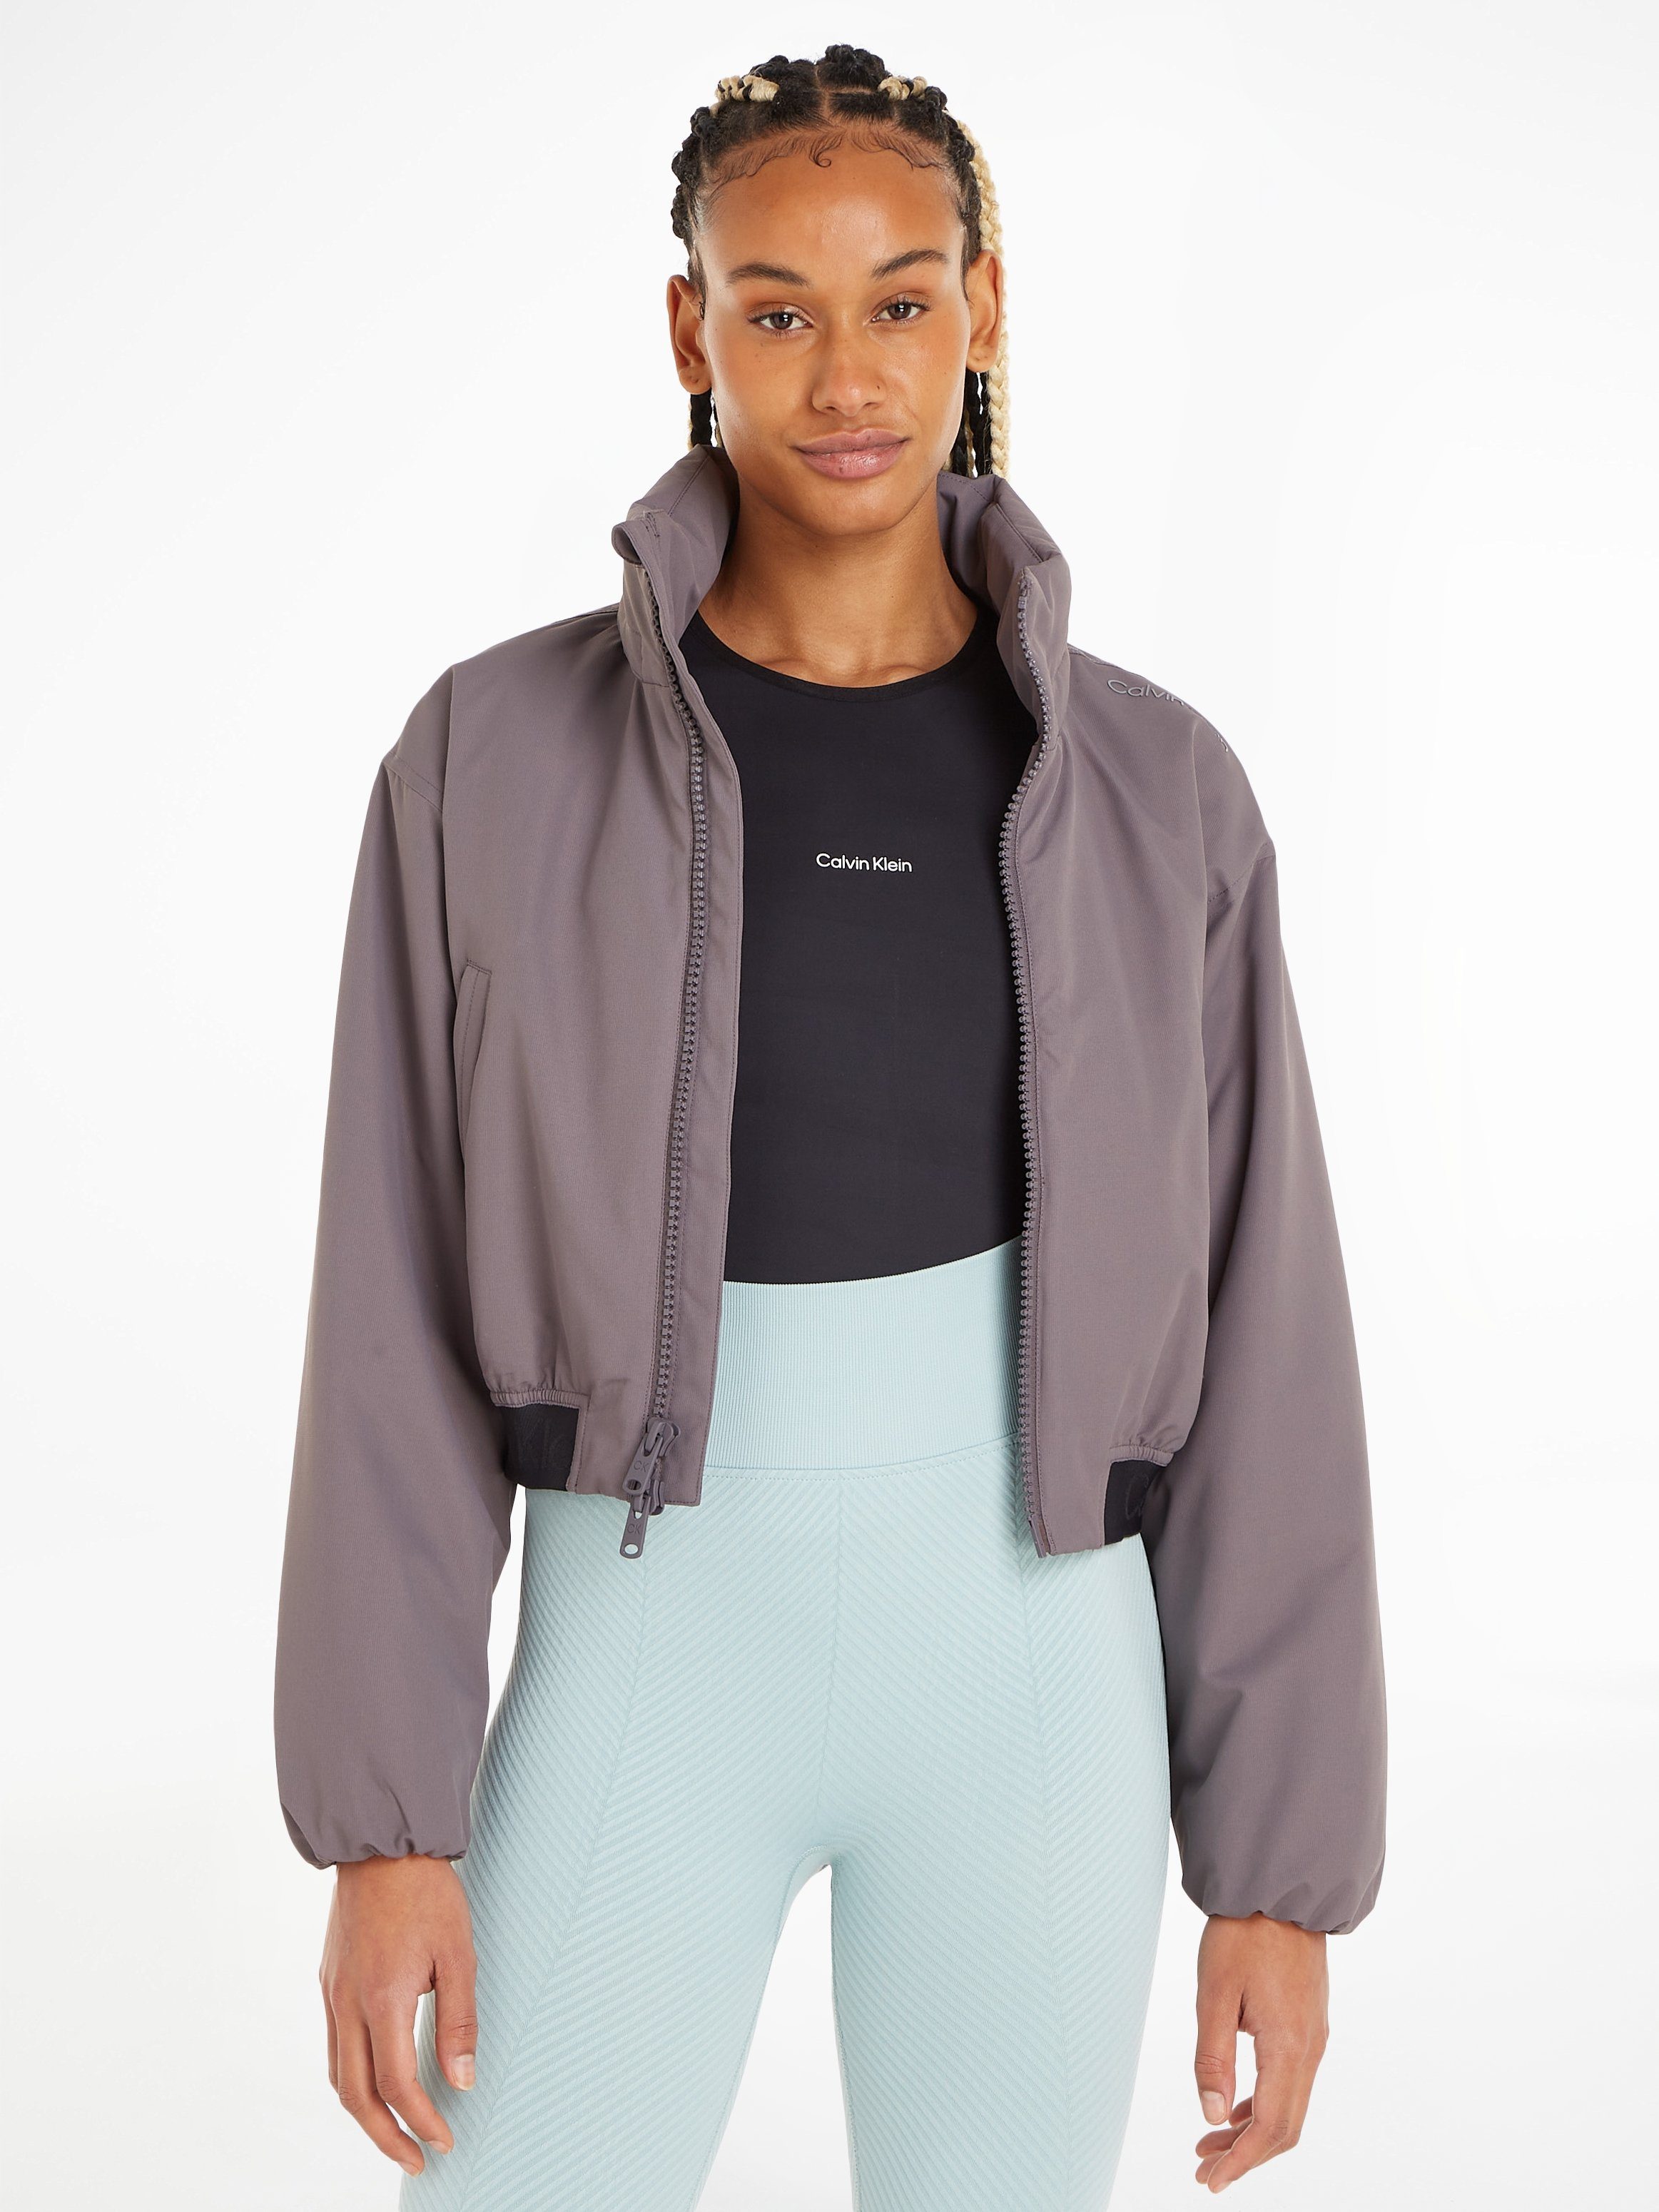 Calvin Klein Sport Outdoorjacke PW - Padded Jacket grau